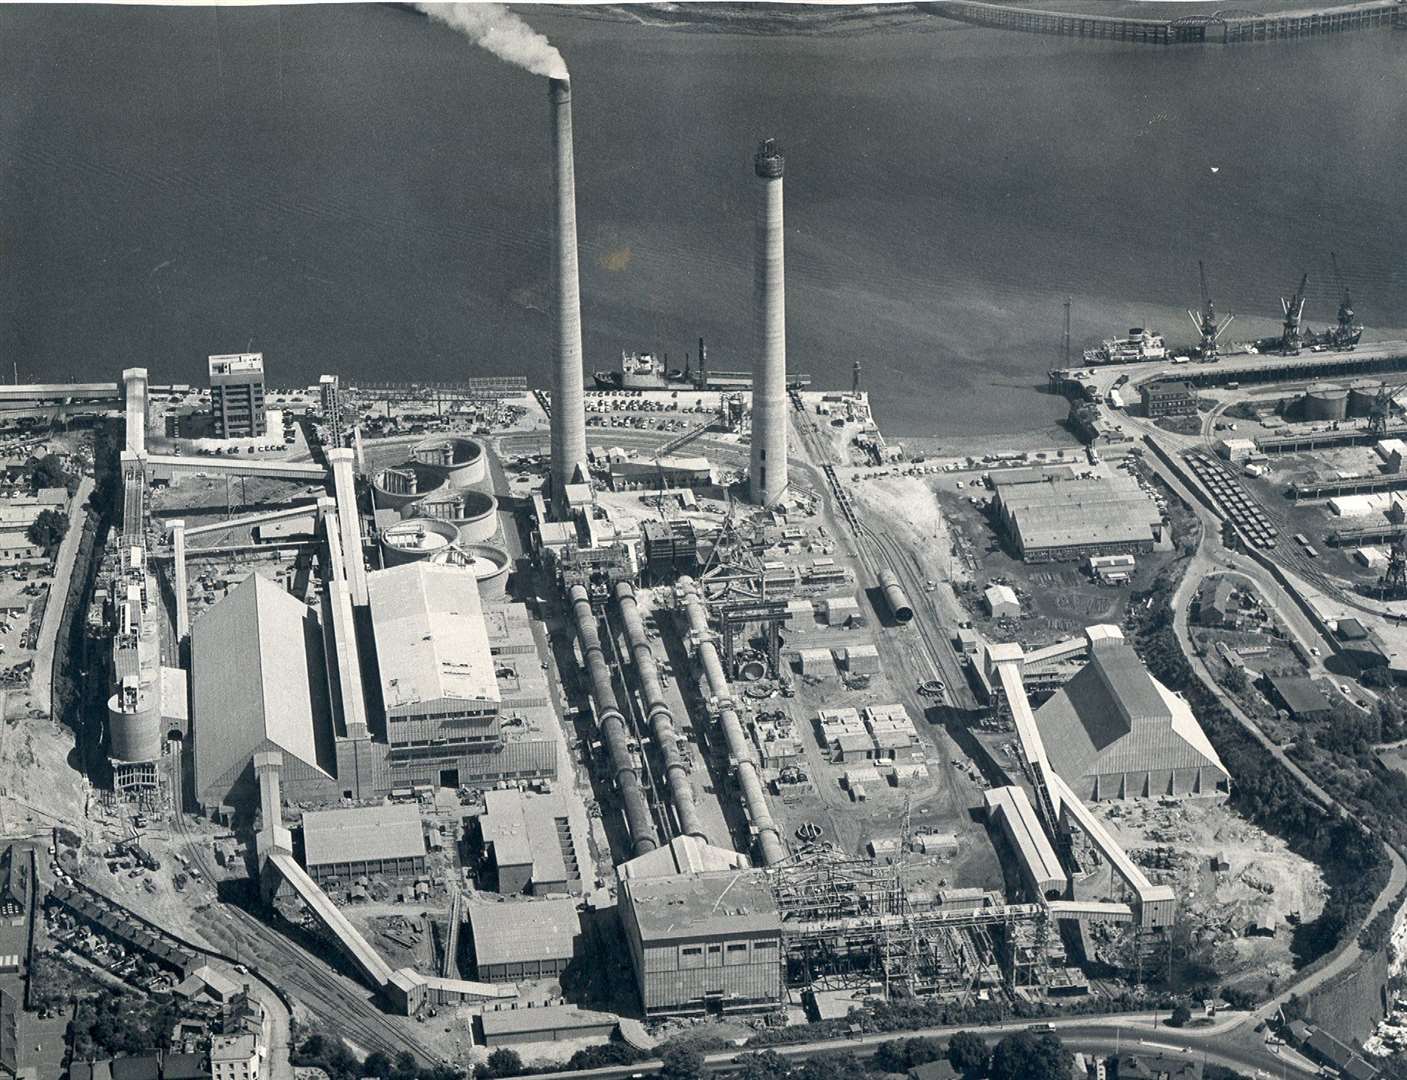 The Northfleet Cement Works. Photo taken in July 1970.